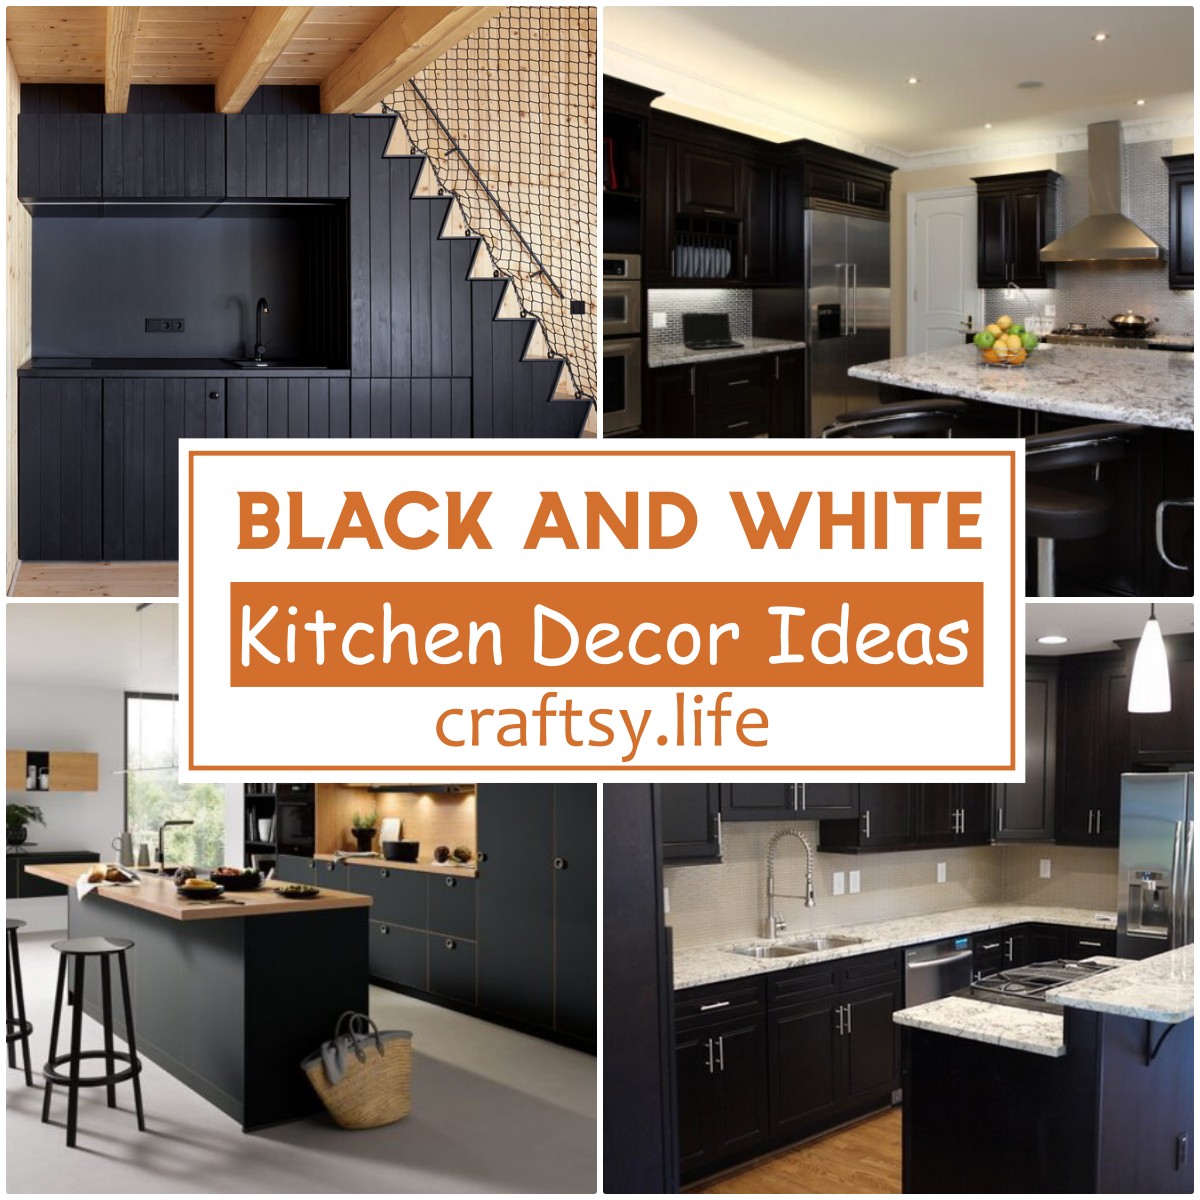 Black and White Kitchen Decor Ideas